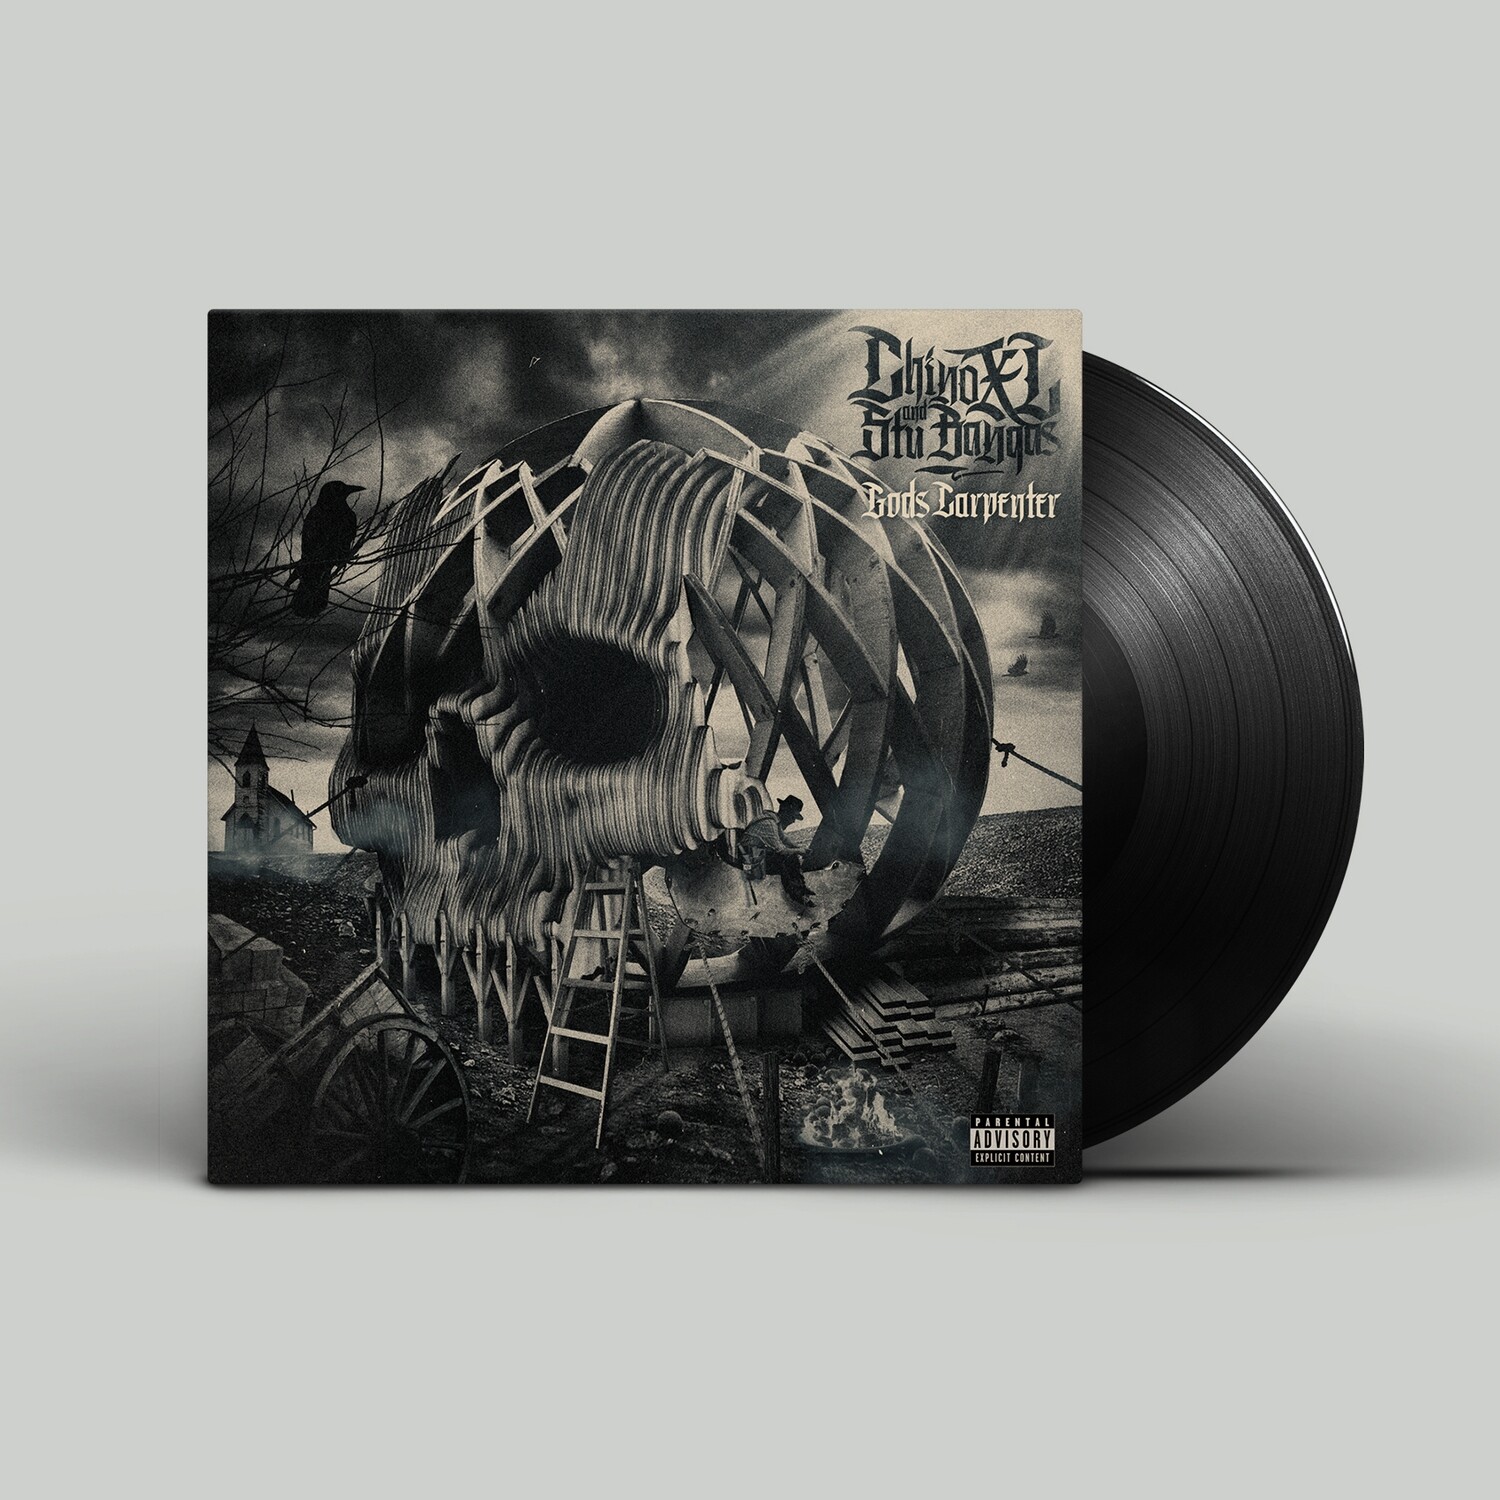 Chino XL and Stu Bangas "God's Carpenter" LP Vinyl (Black Vinyl - Pre-Order - SHIPS BY END OF OCTOBER)